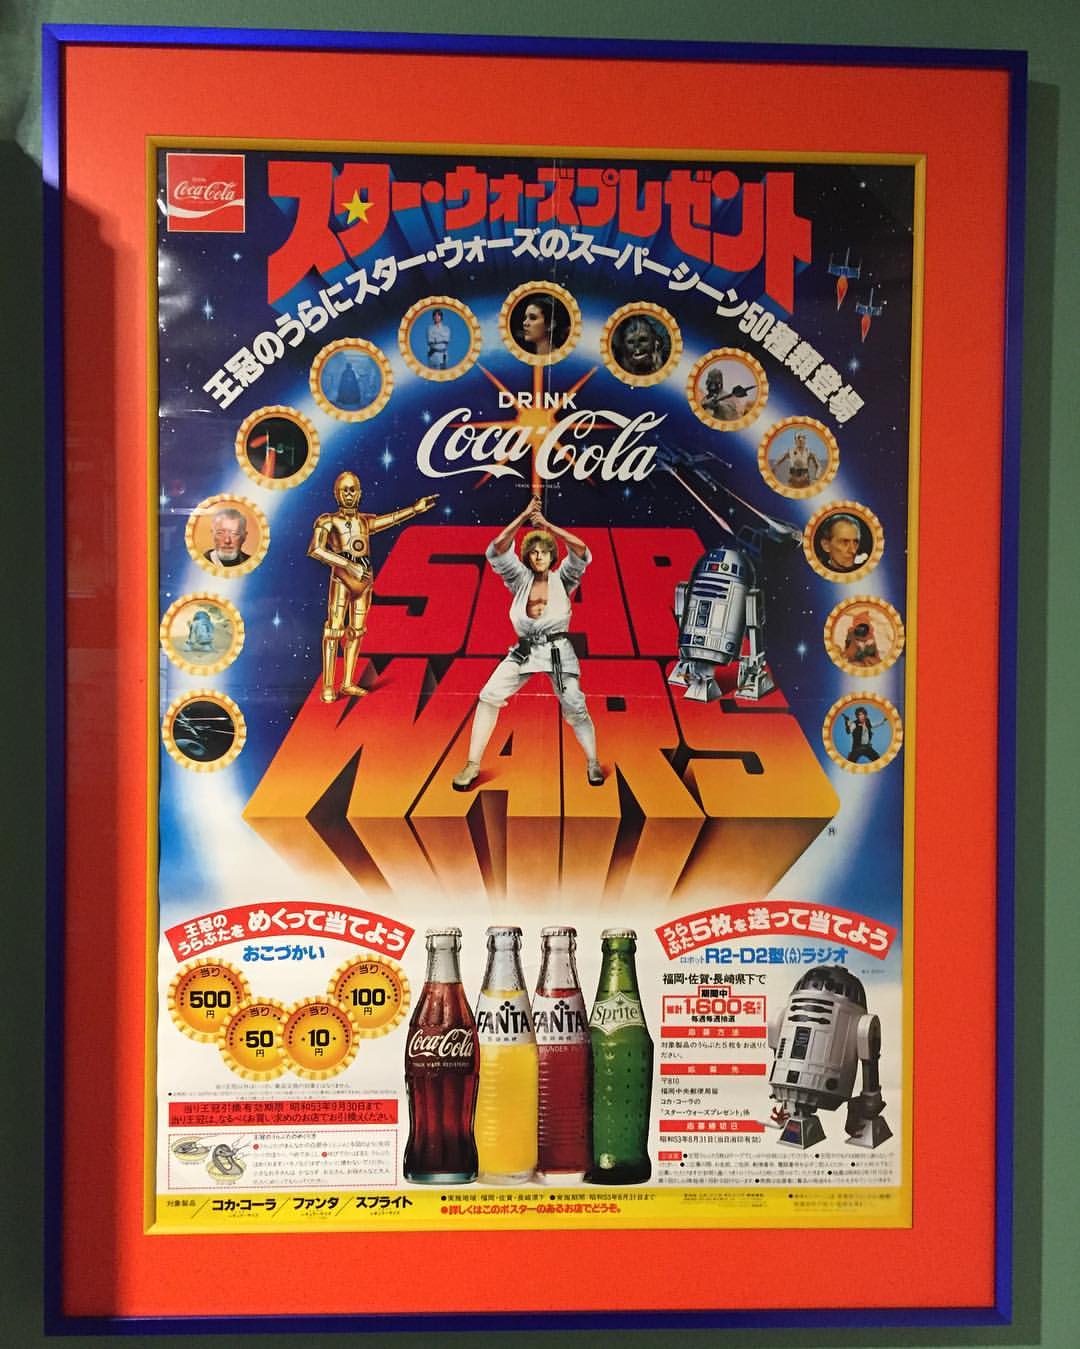 Coca-Cola Poster - Star Wars Collectors Archive